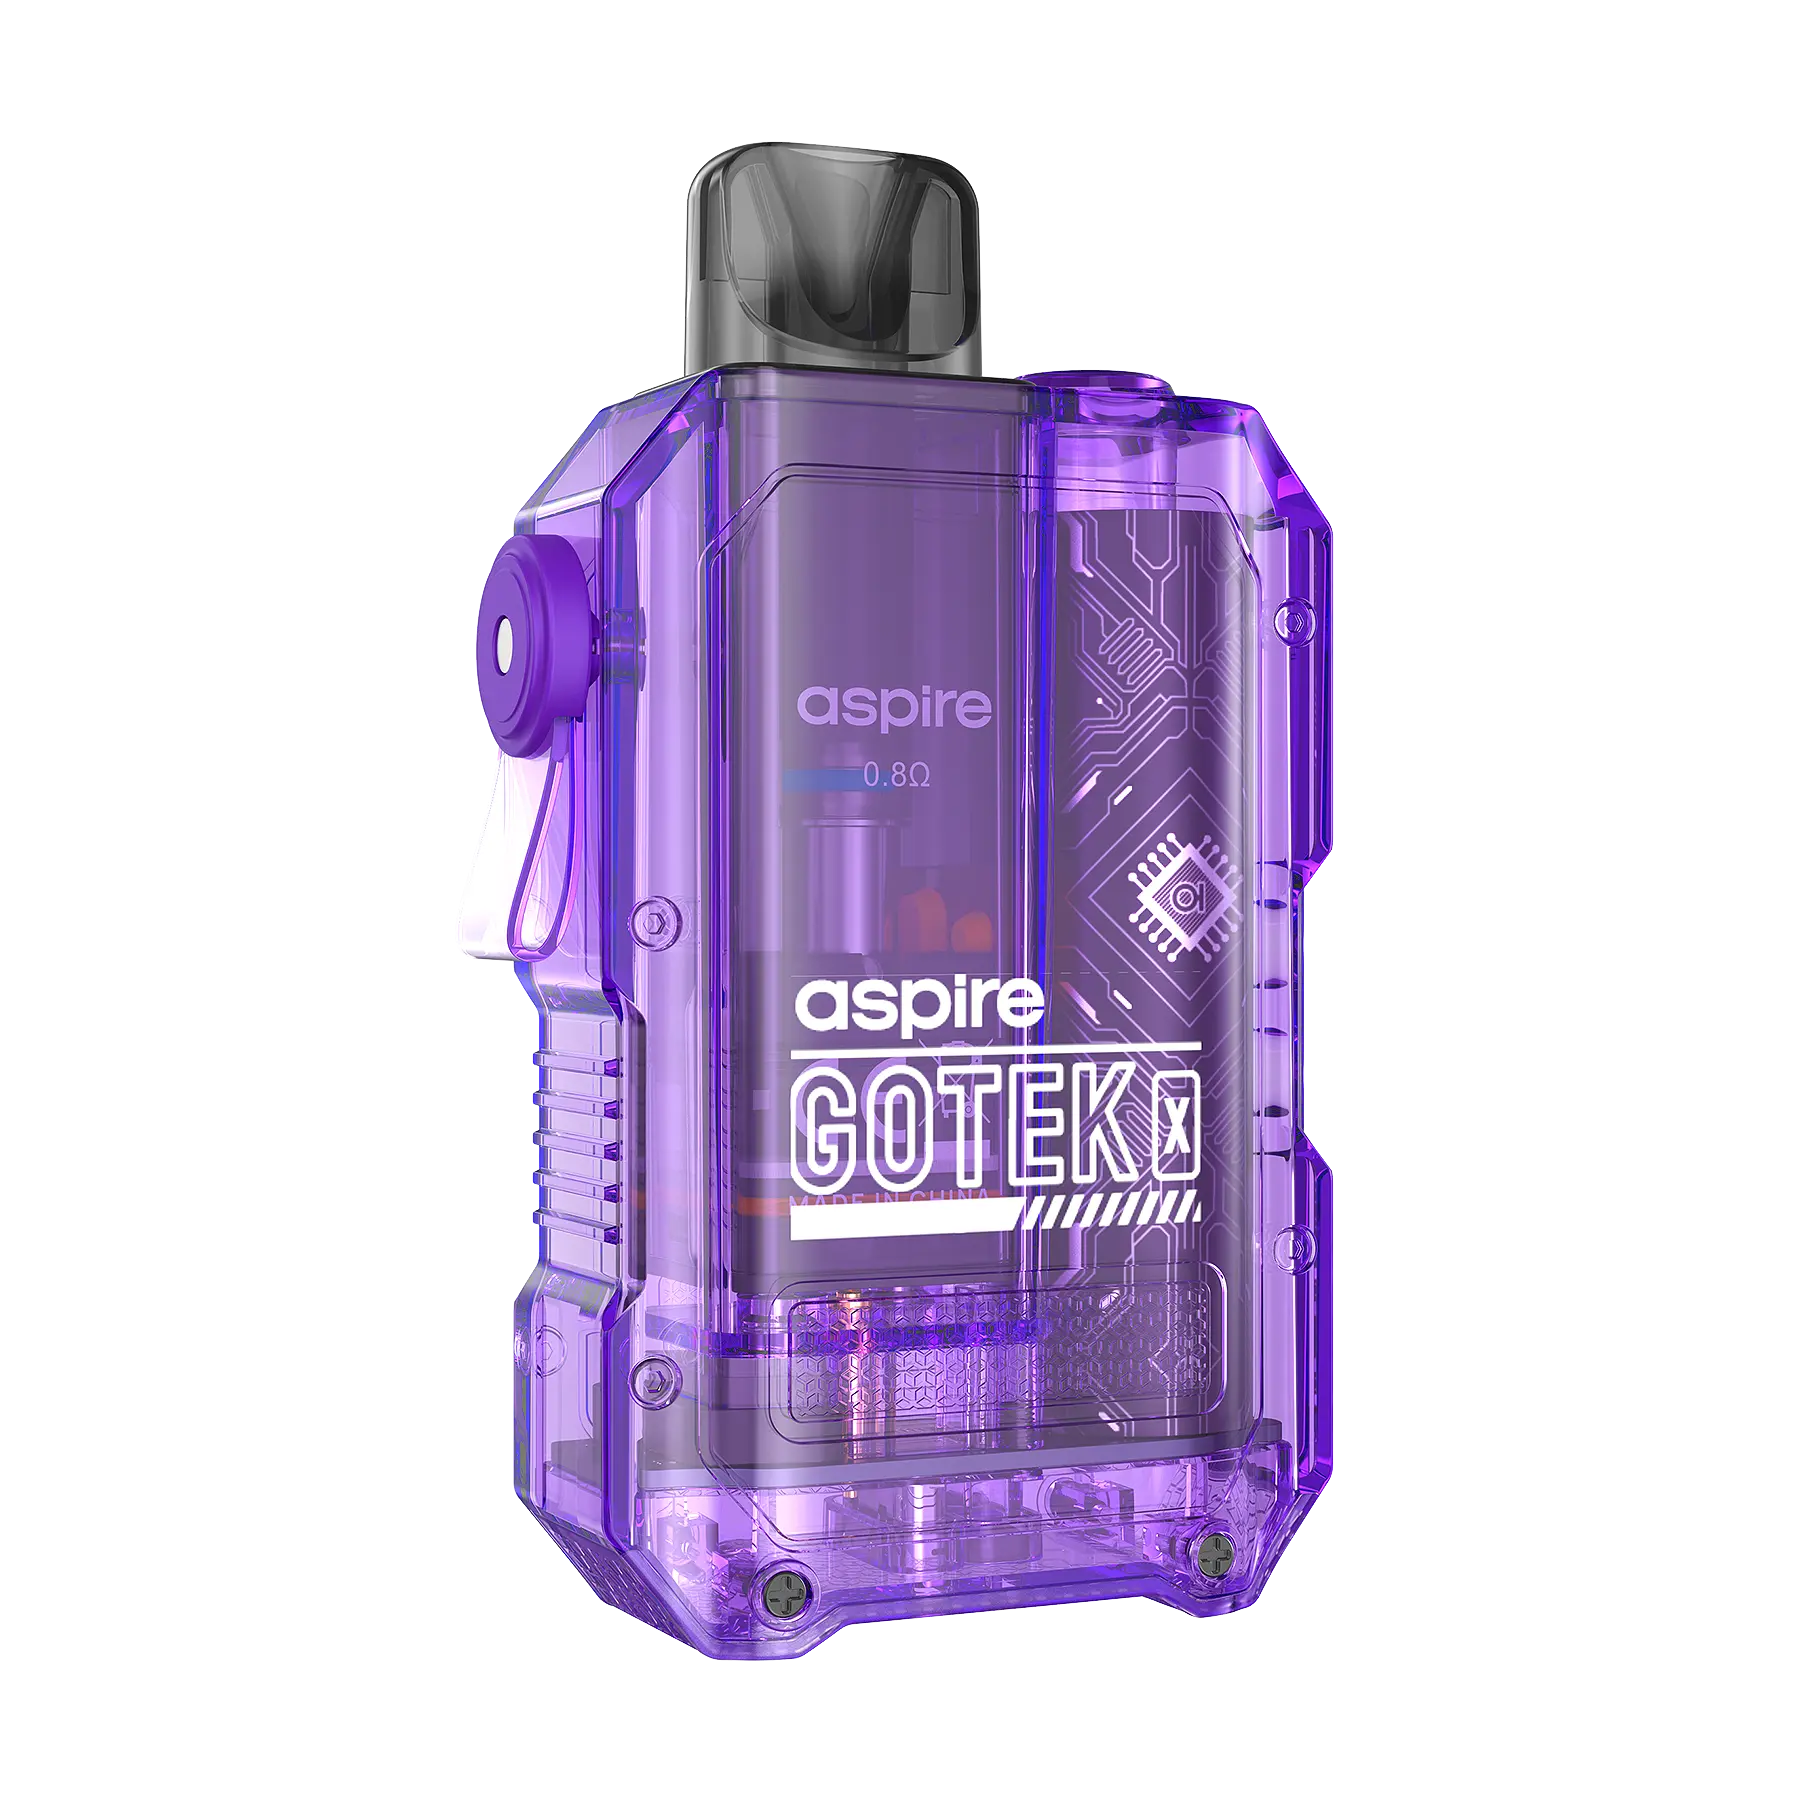 Aspire UK GoteK X Pod Kit - Violet